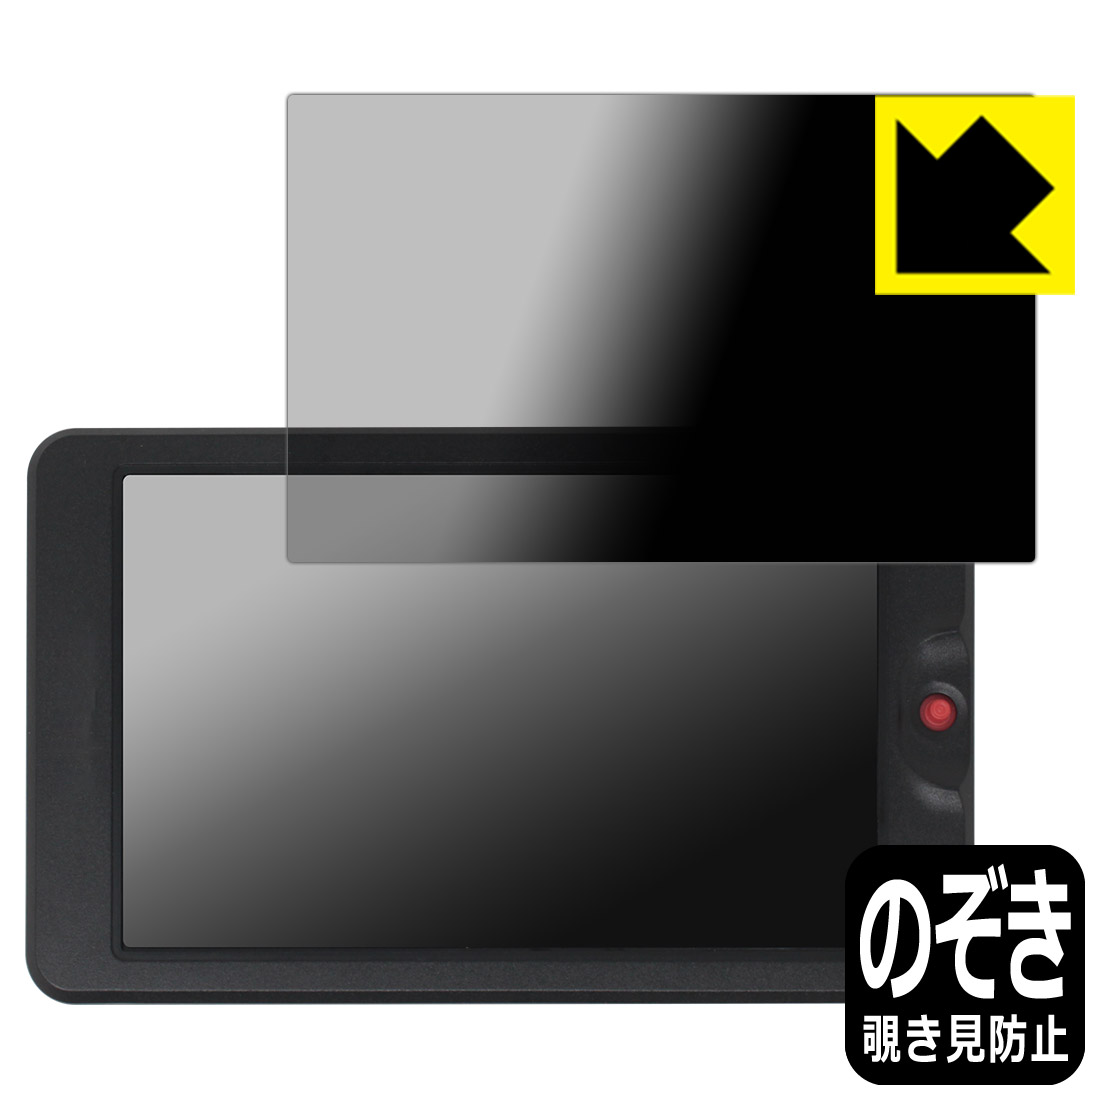 Privacy Shield【覗き見防止・反射低減】保護フィルム OSEE G7 / T7 日本製 自社製造直販